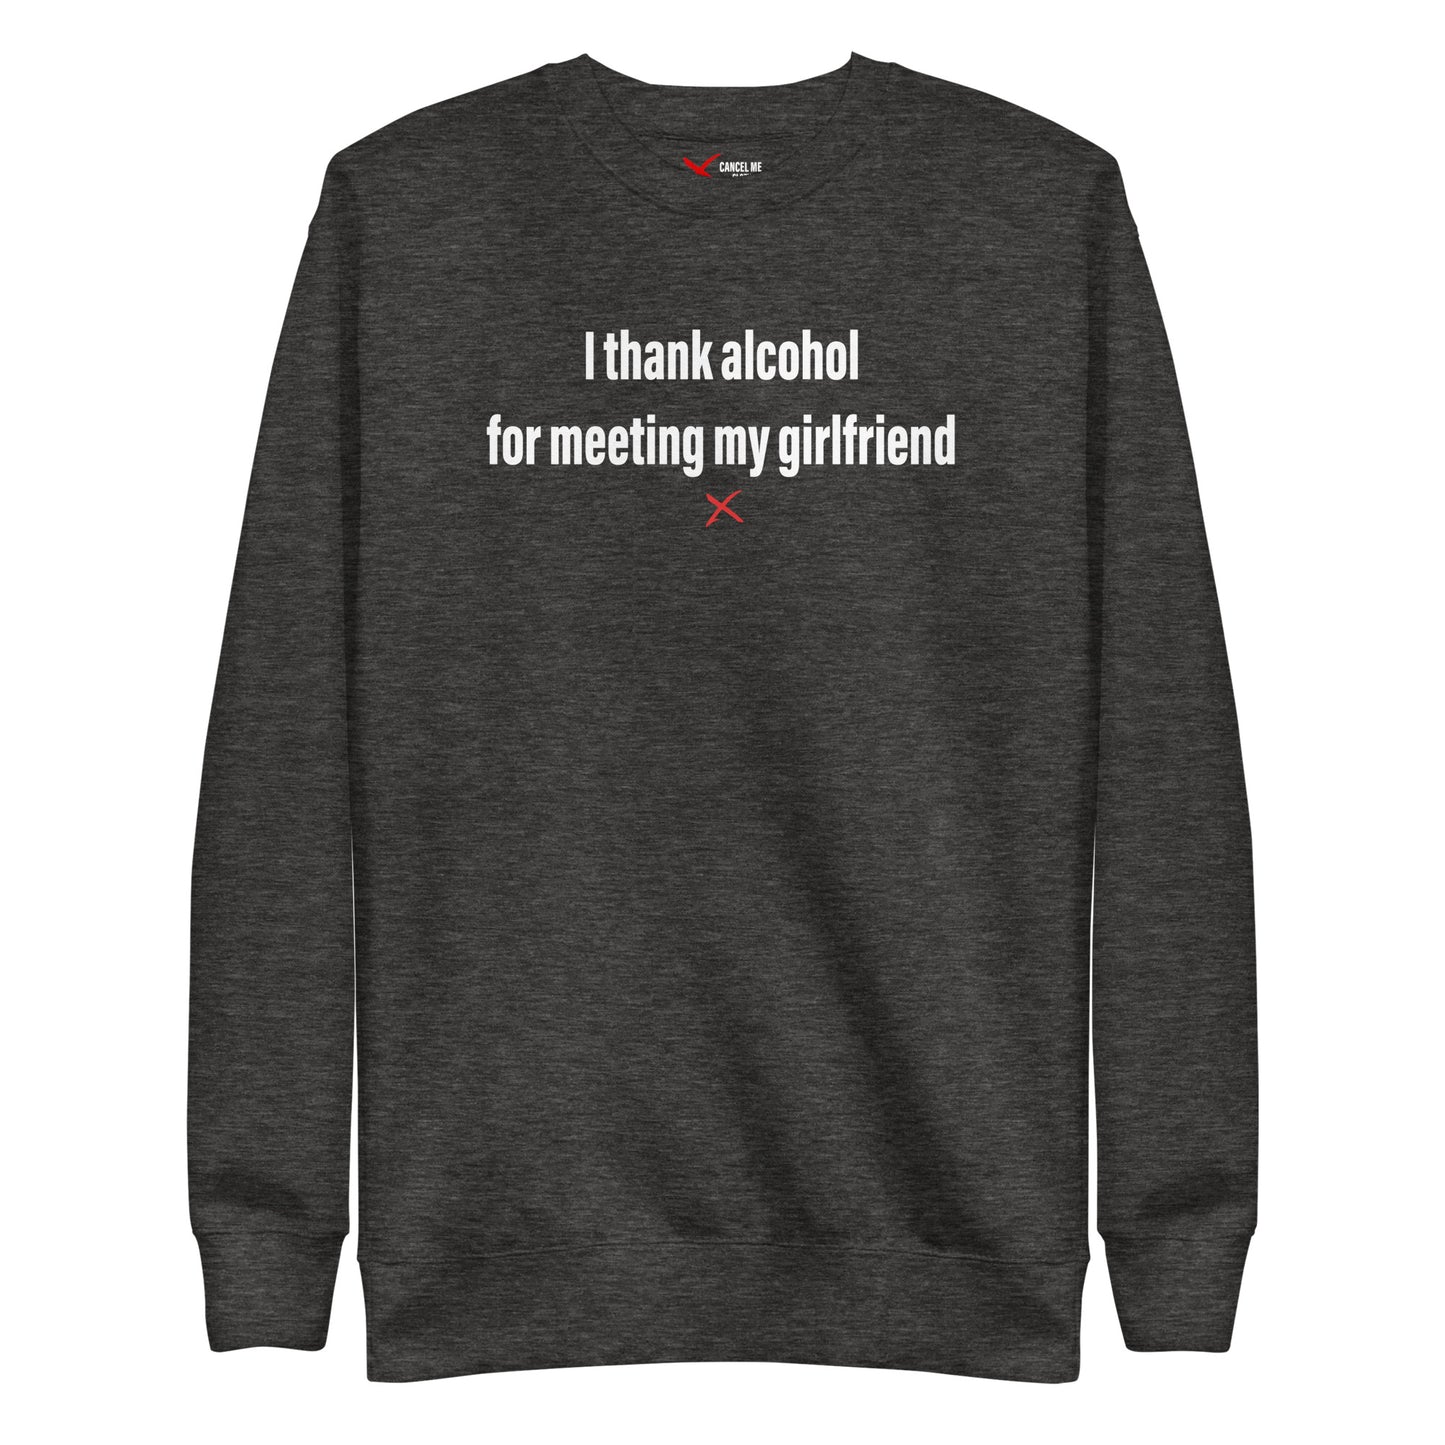 I thank alcohol for meeting my girlfriend - Sweatshirt